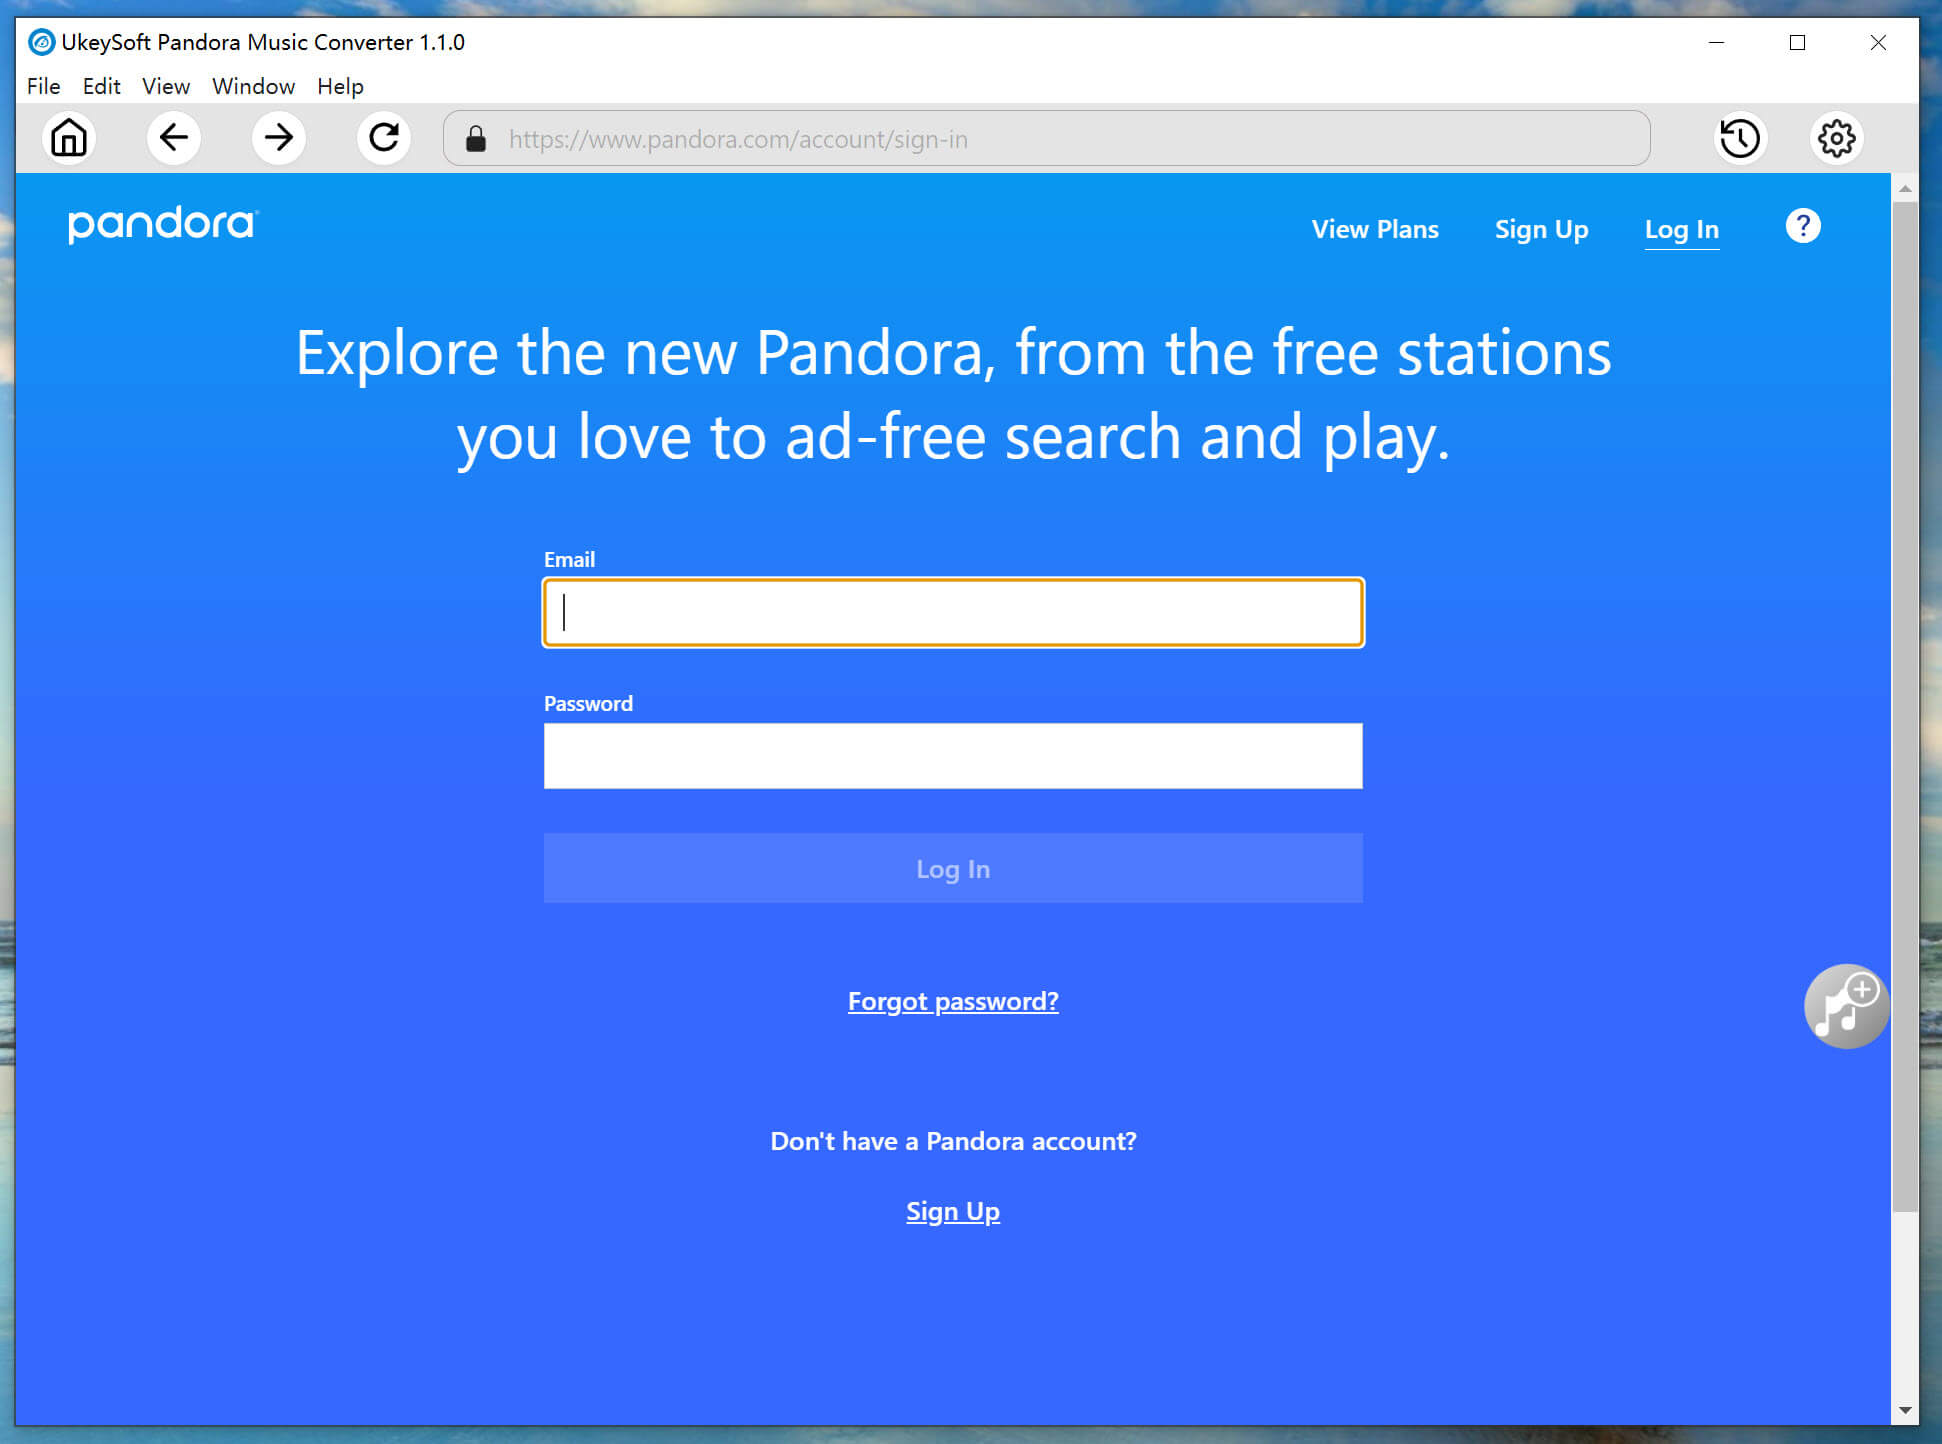 Pandora-Konto anmelden